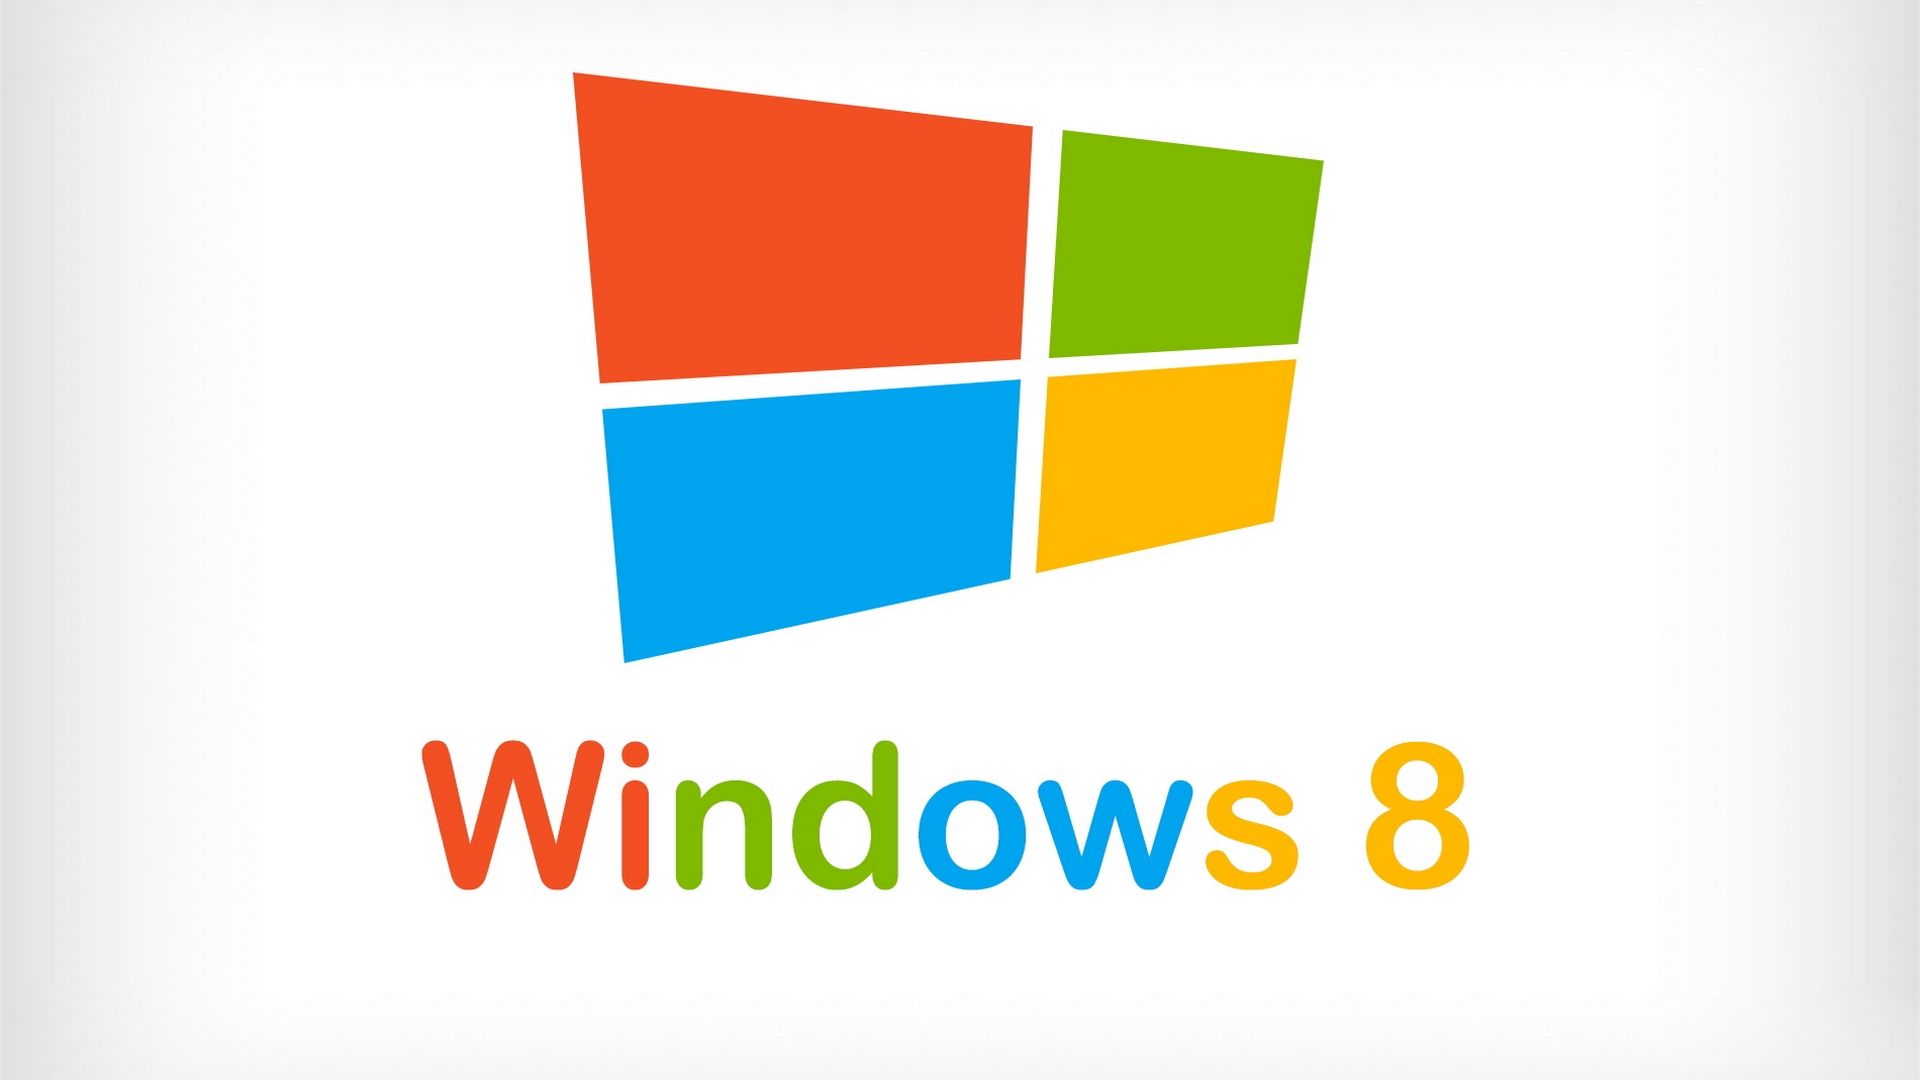 Windows 8 official Wallpaper | HD Wallpapers